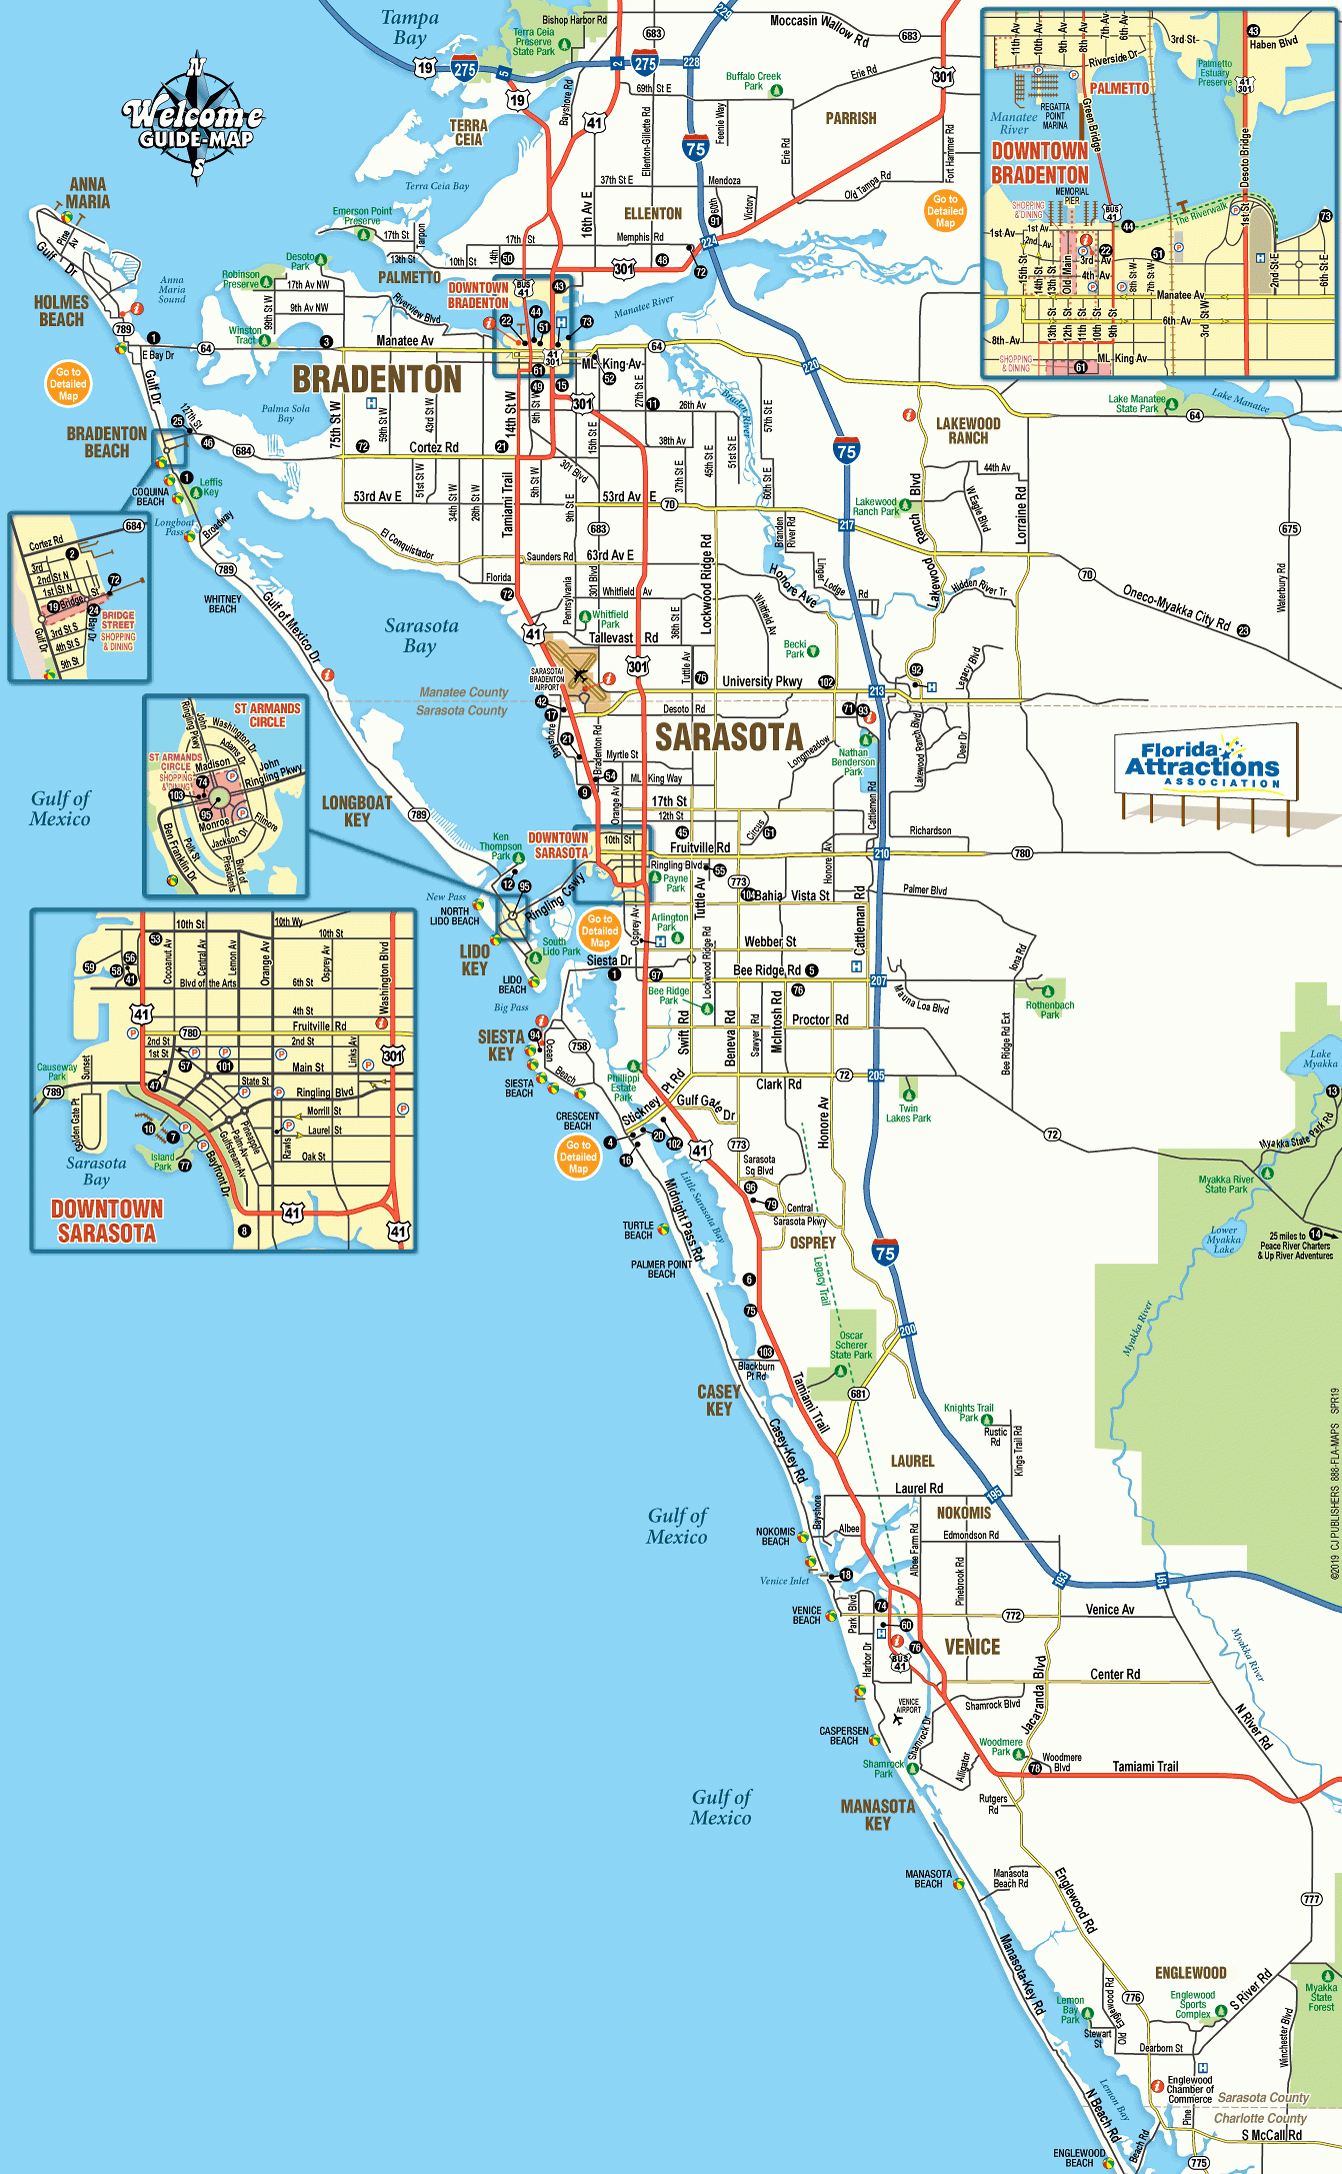 Map Of Sarasota And Bradenton Florida - Welcome Guide-Map To - Siesta Beach Sarasota Florida Map